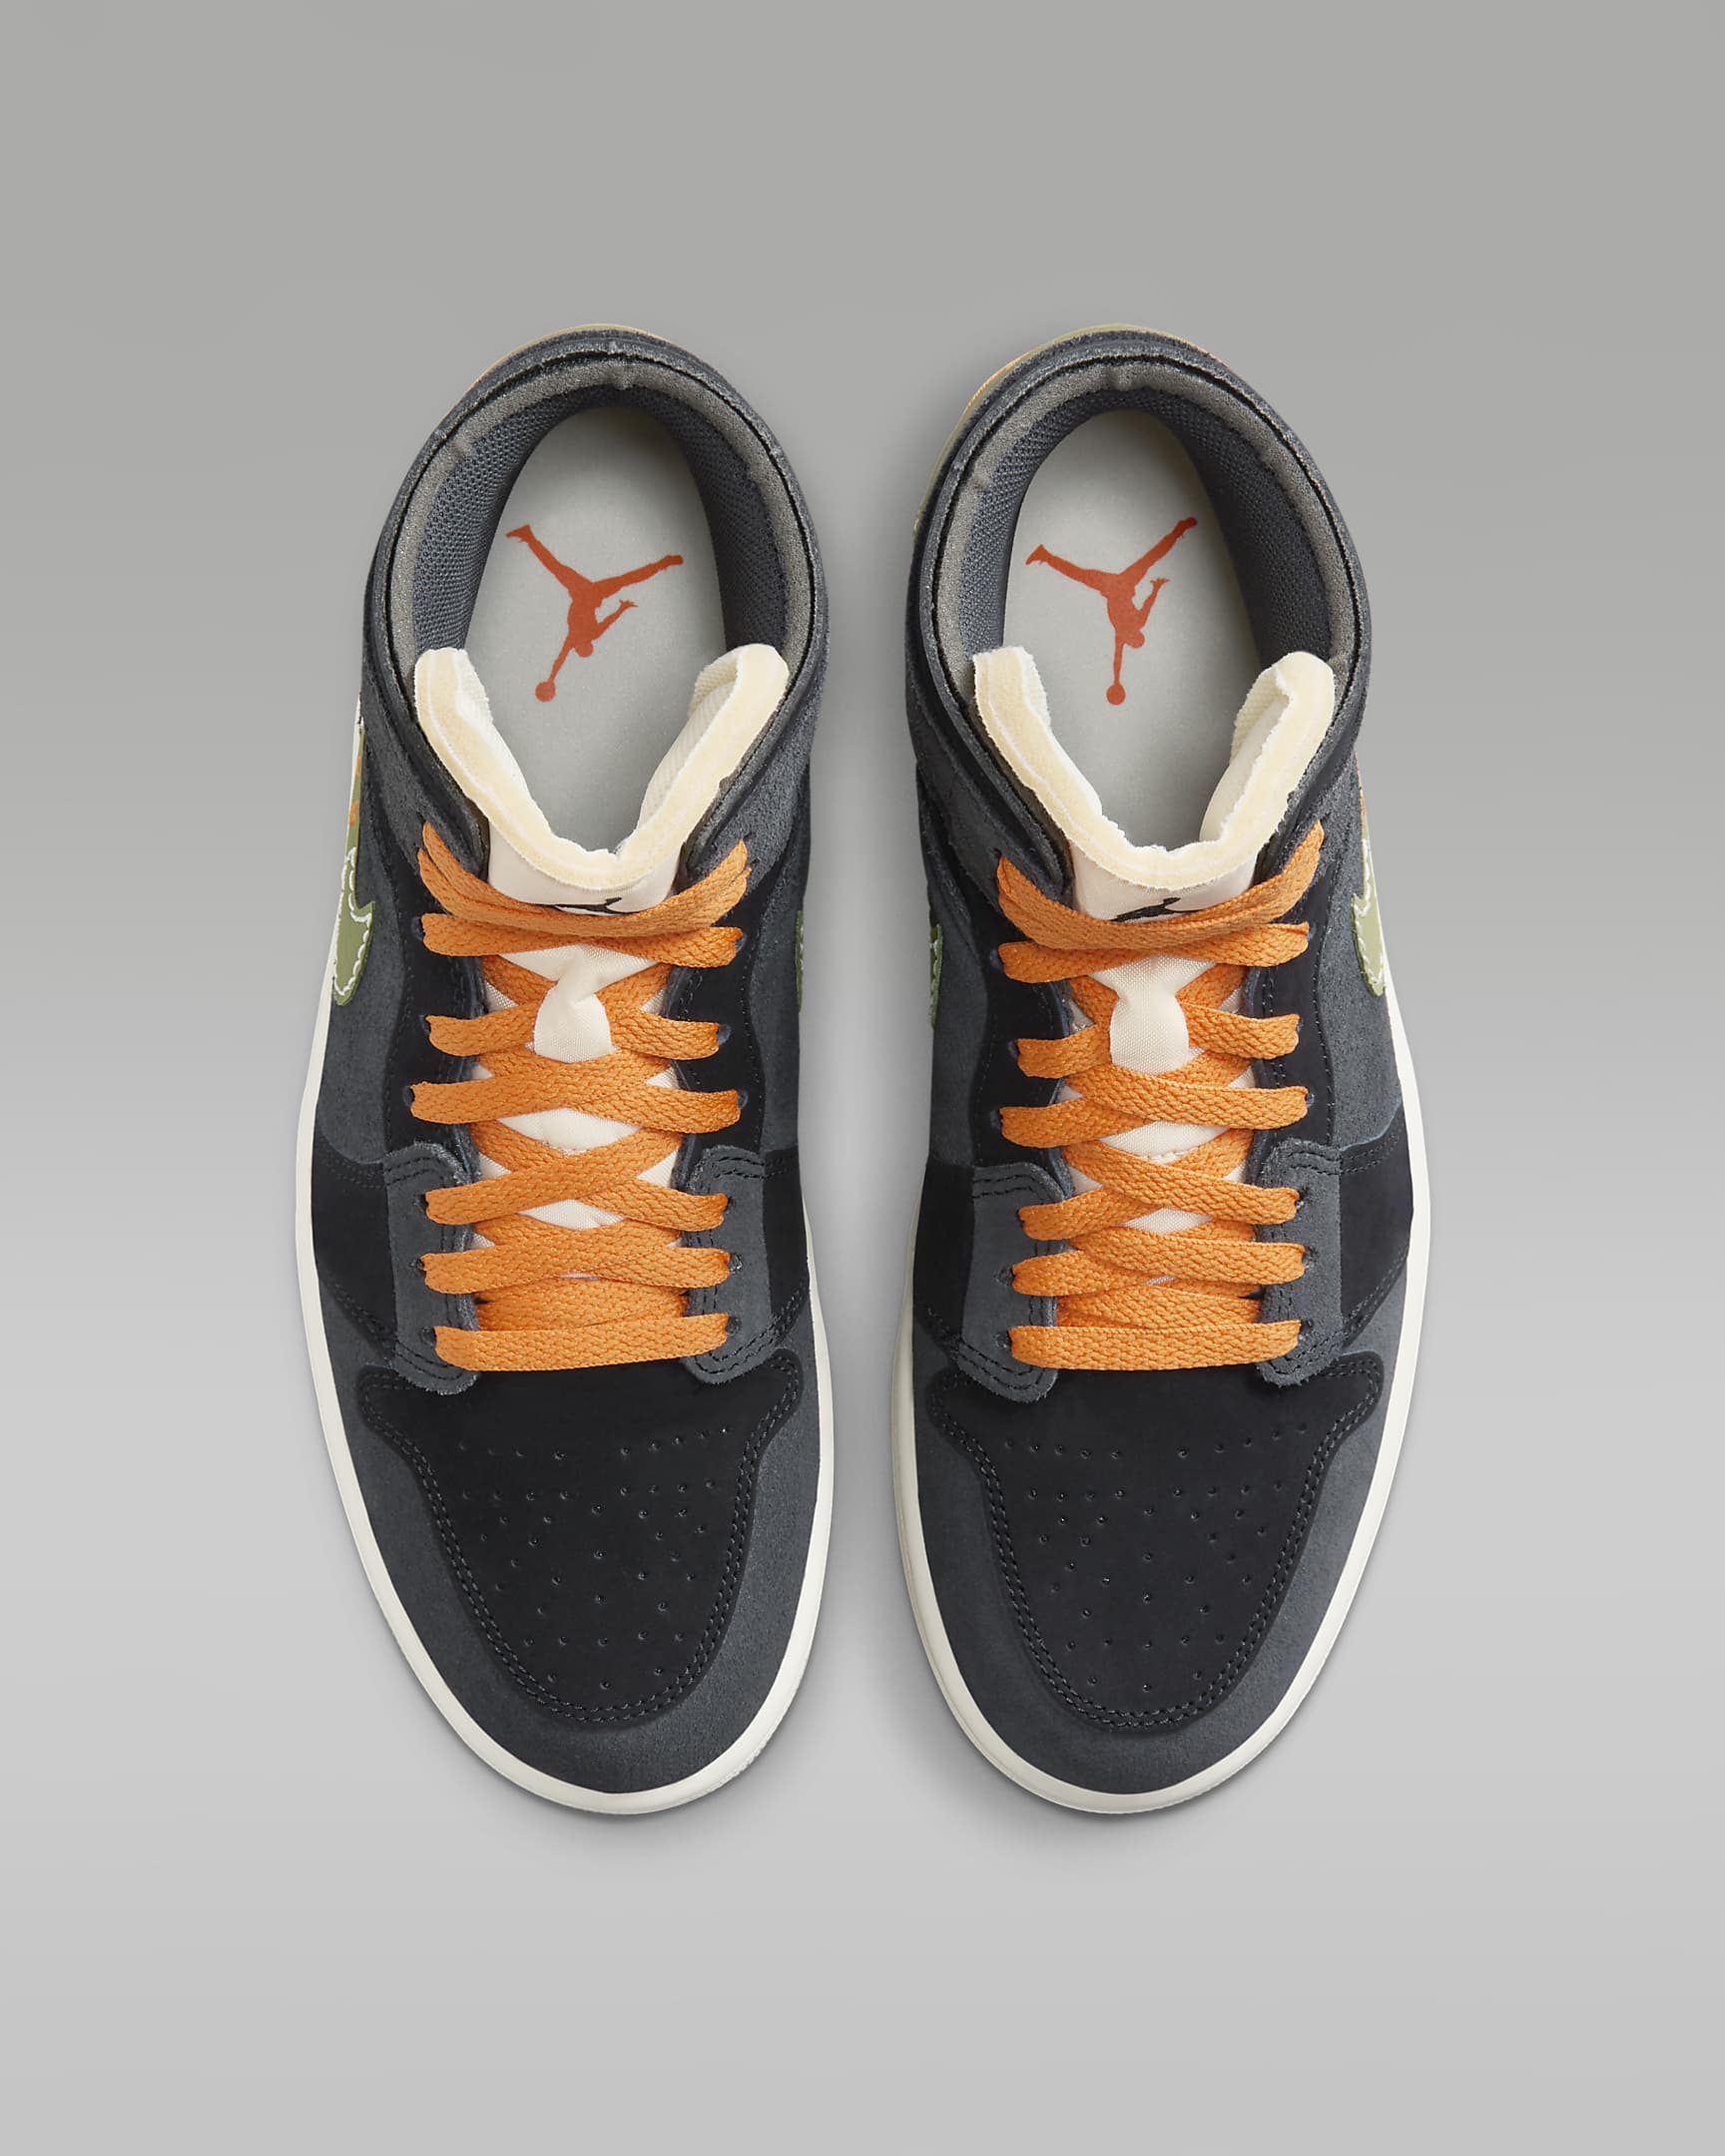 Walk the Talk: How Air Jordan 1 Mid SE Craft Men’s Shoes Elevate Your Streetwear Game!